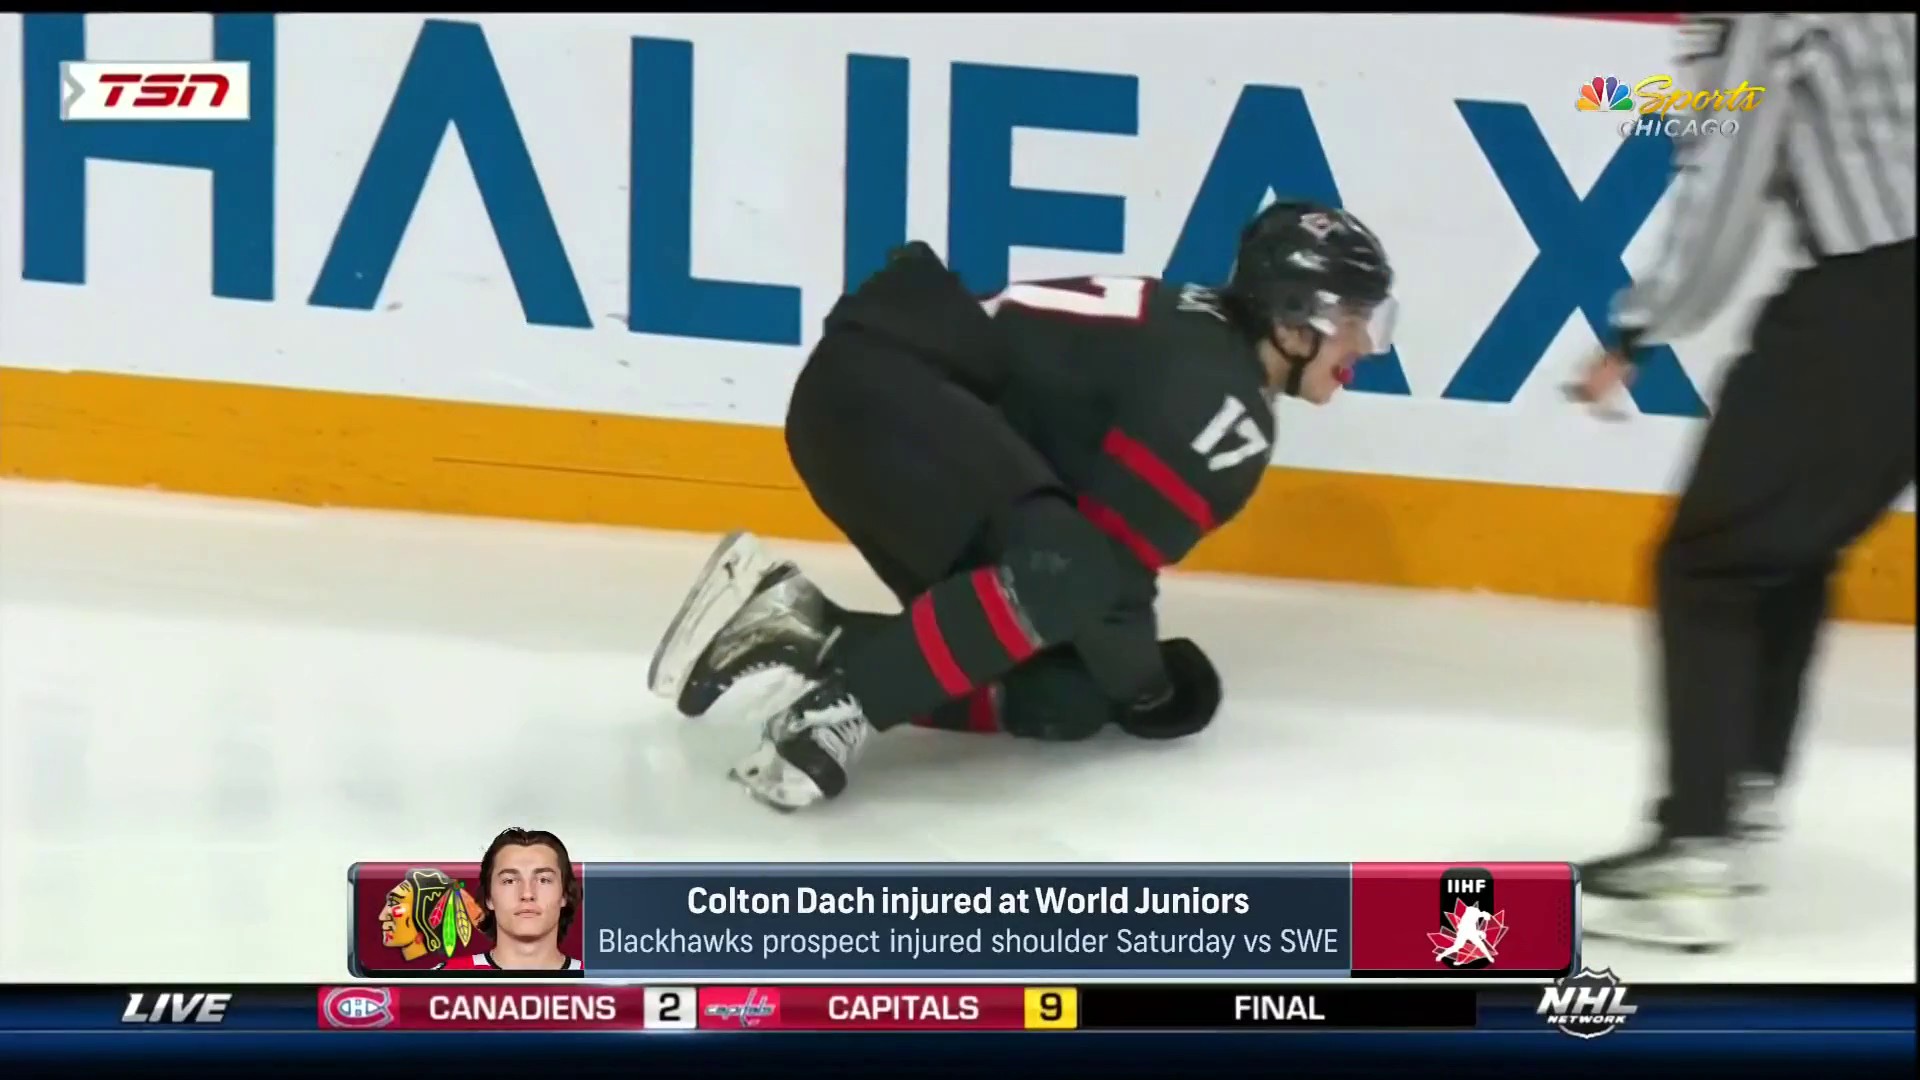 Blackhawks prospect Colton Dach suffered shoulder injury at World Juniors